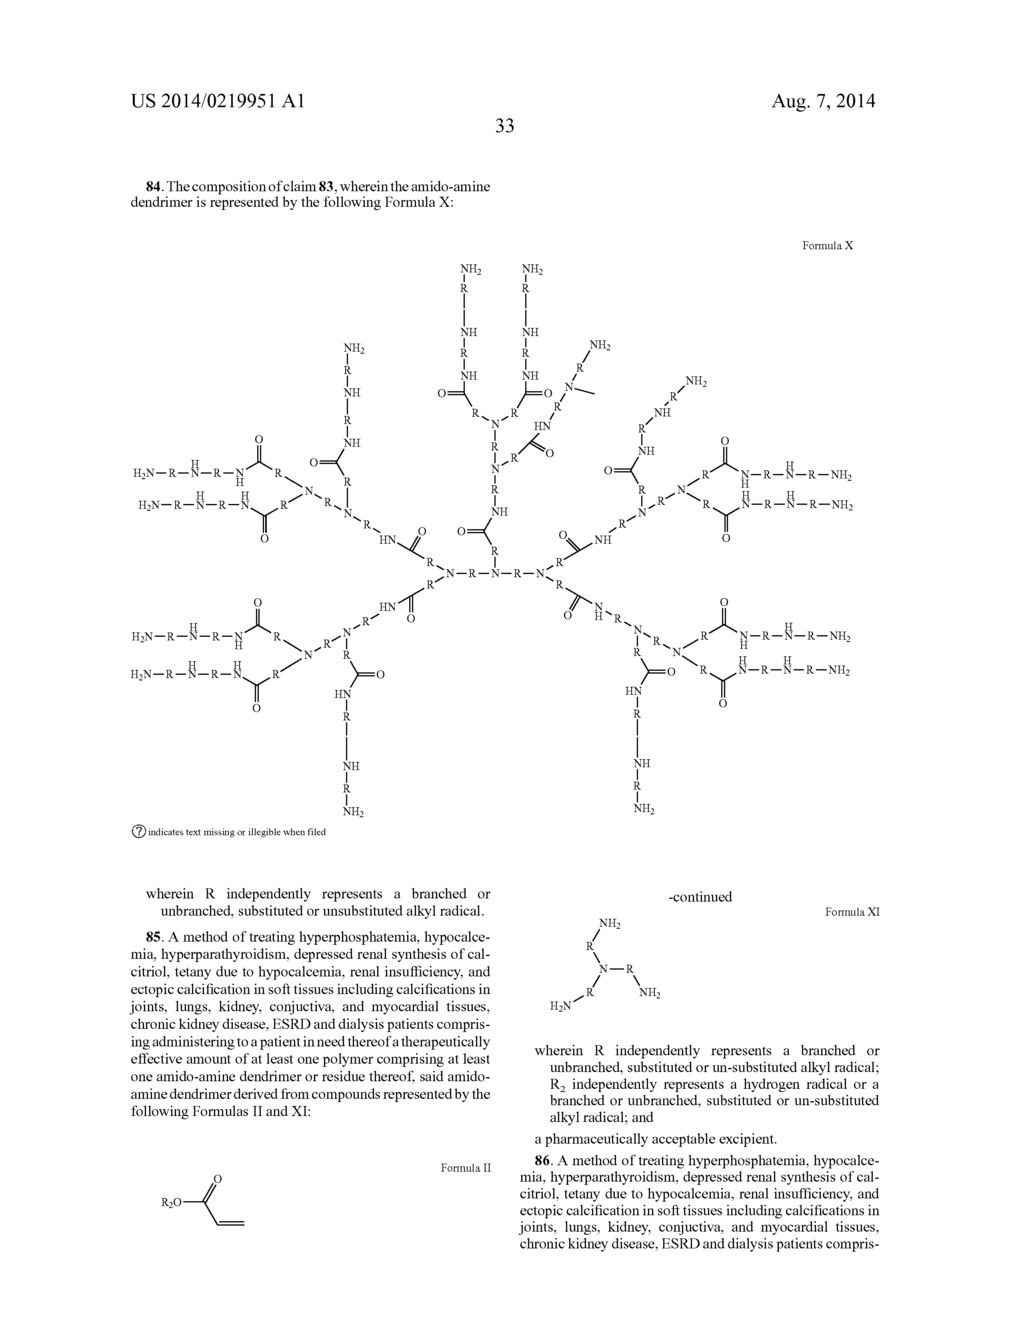 AMIDO-AMINE DENDRIMER COMPOSITIONS - diagram, schematic, and image 34